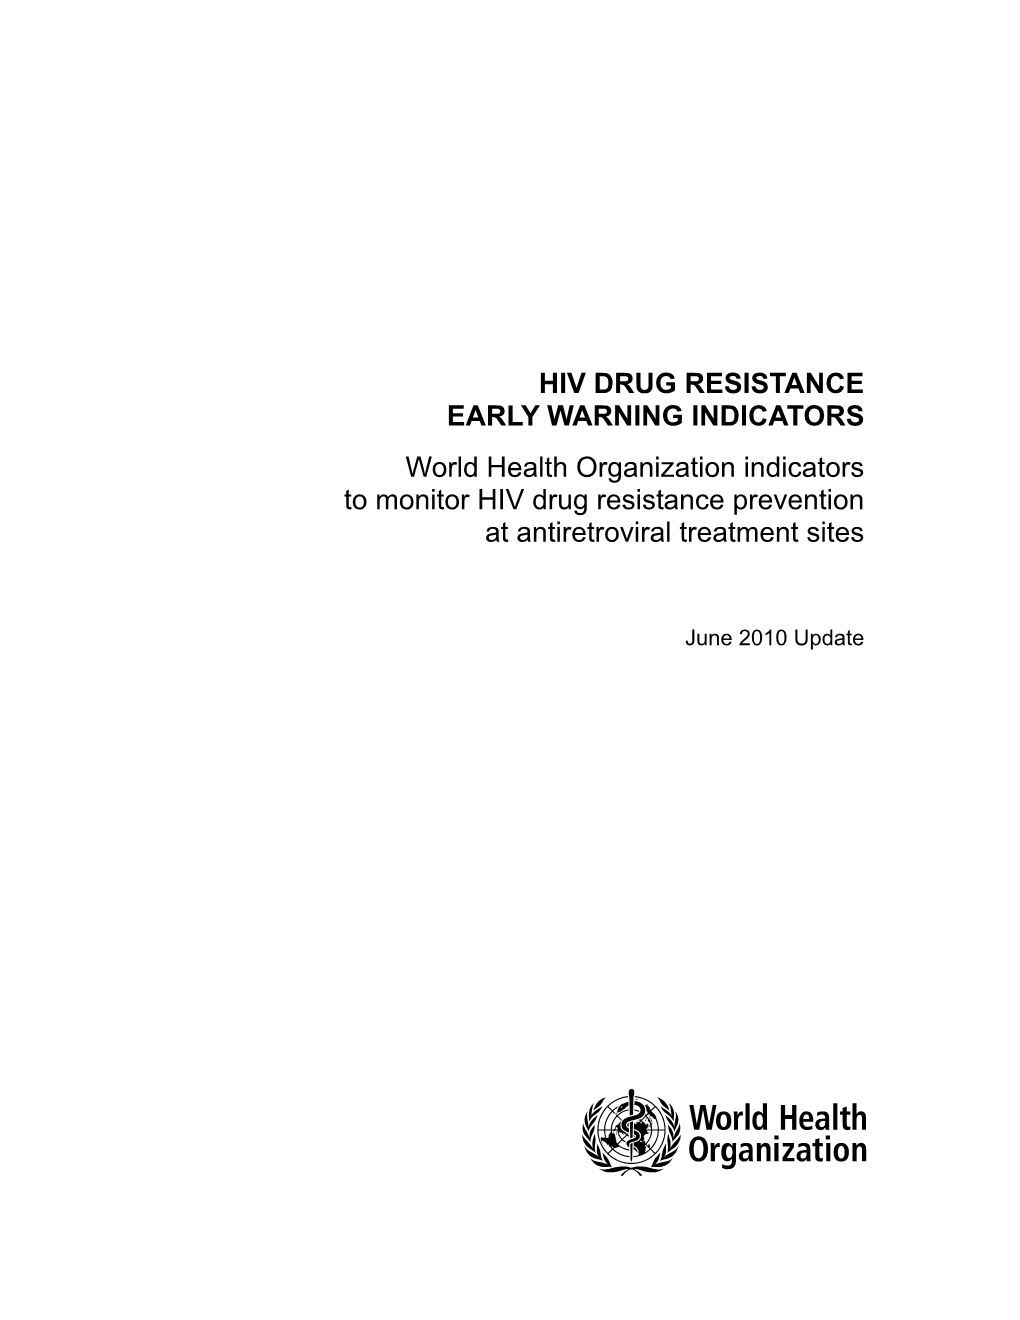 HIV DRUG RESISTANCE EARLY WARNING INDICATORS World Health Organization Indicators to Monitor HIV Drug Resistance Prevention at Antiretroviral Treatment Sites